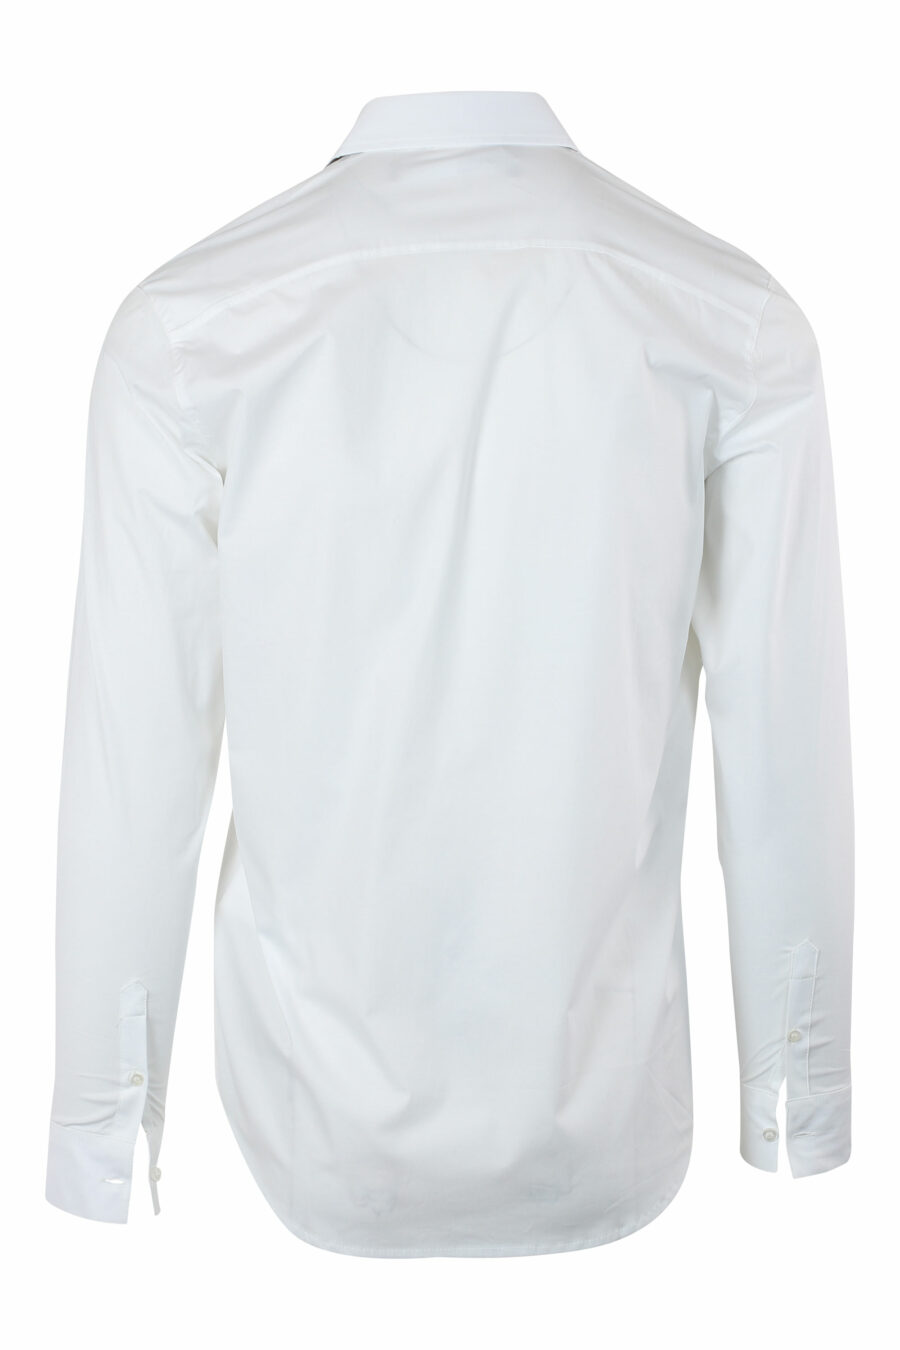 Chemise blanche avec logo teddy brodé - IMG 9614